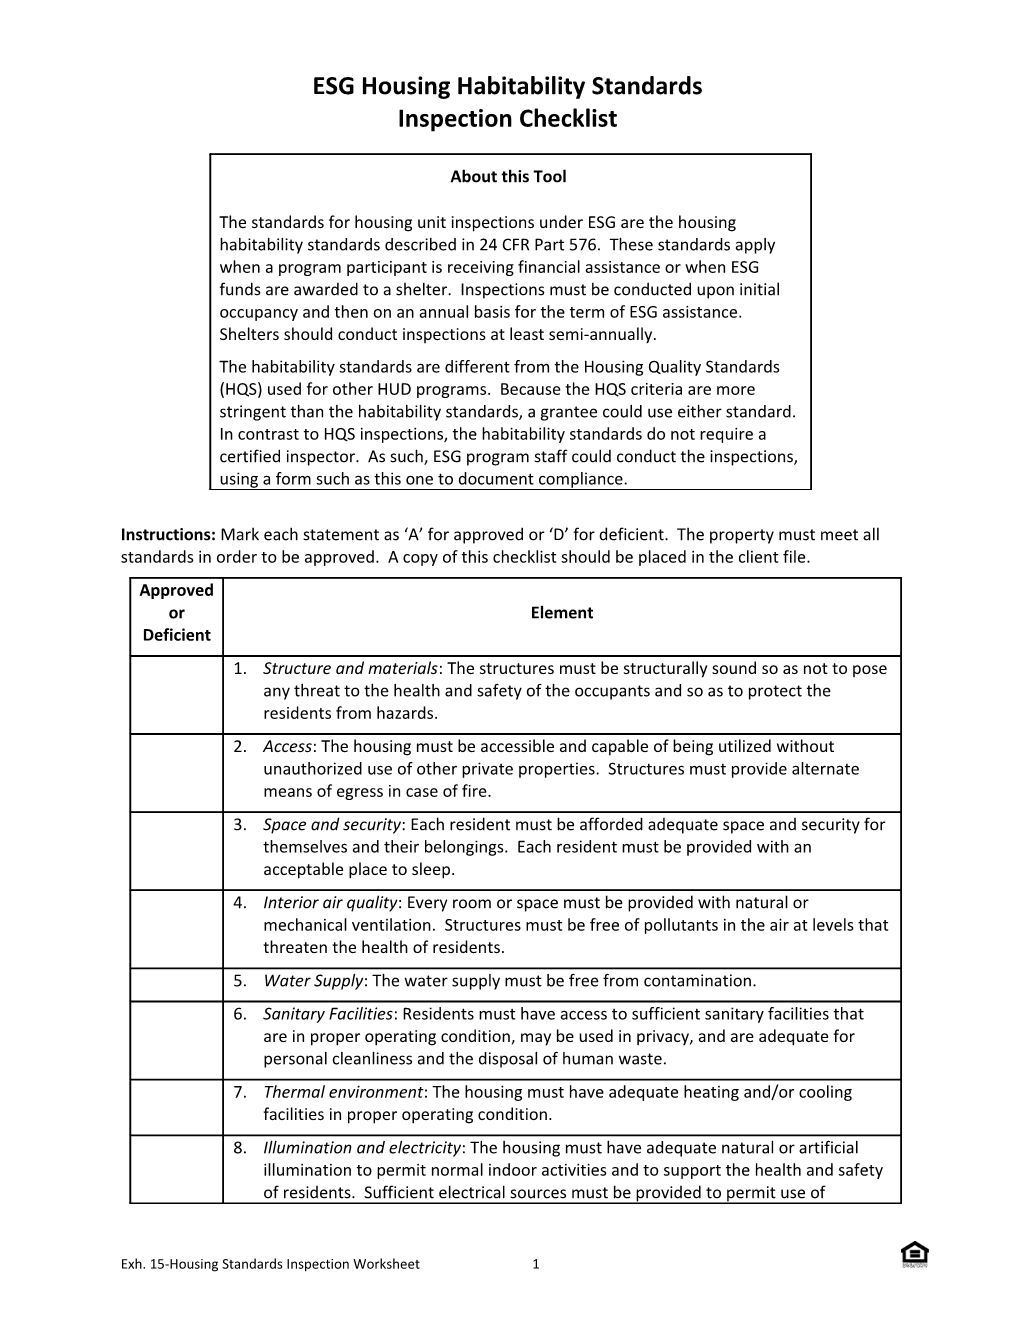 HPRP Housing Habitability Standards Inspection Checklist